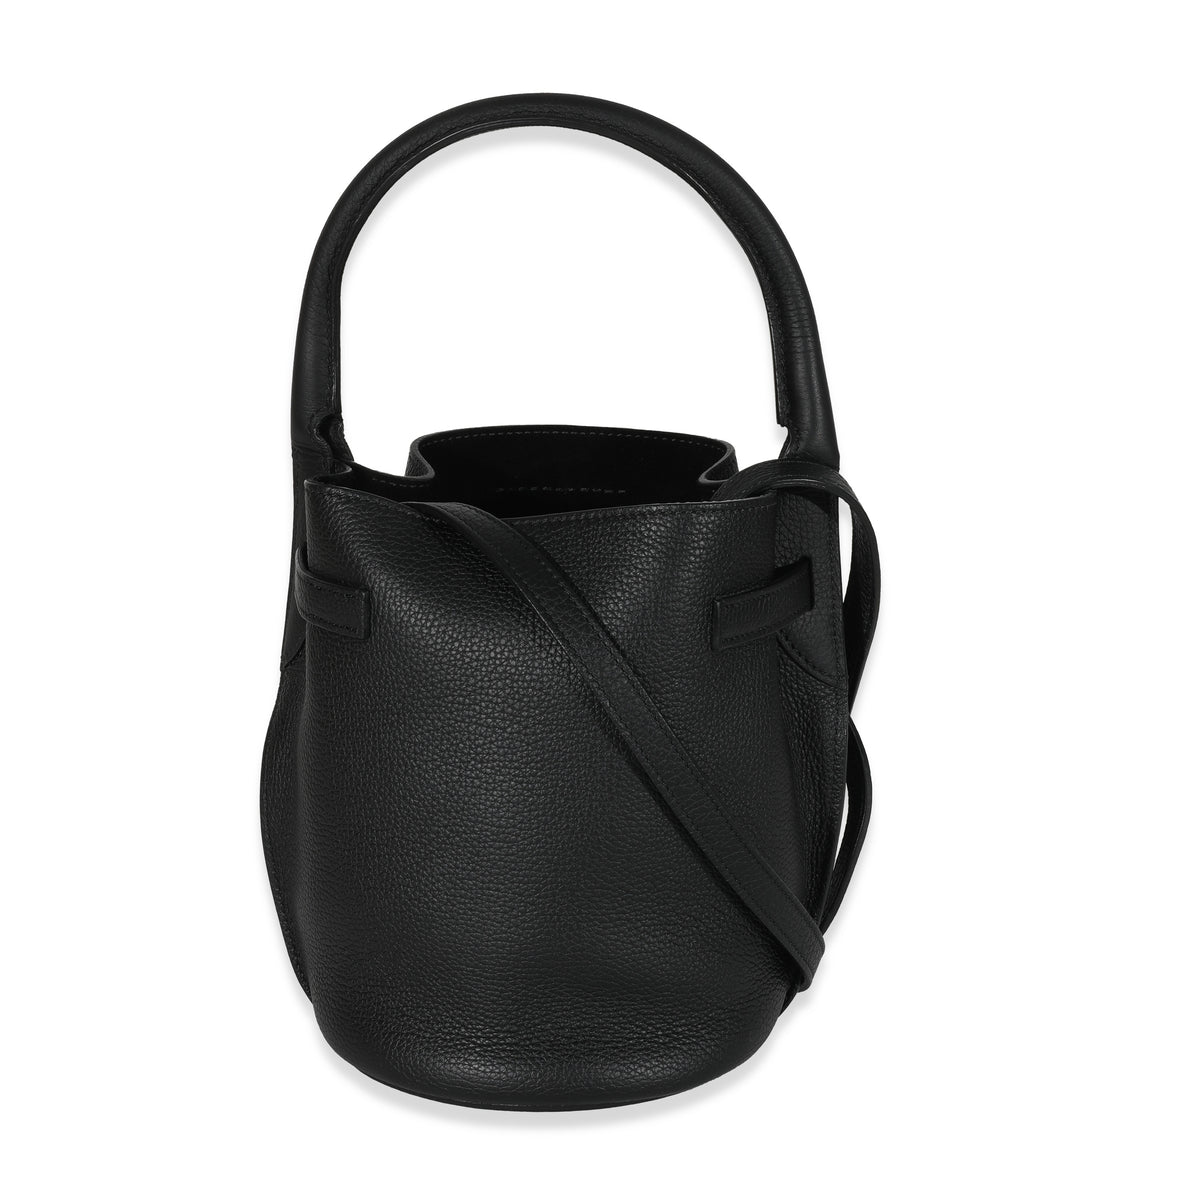 Celine Big Bucket Bag in Black